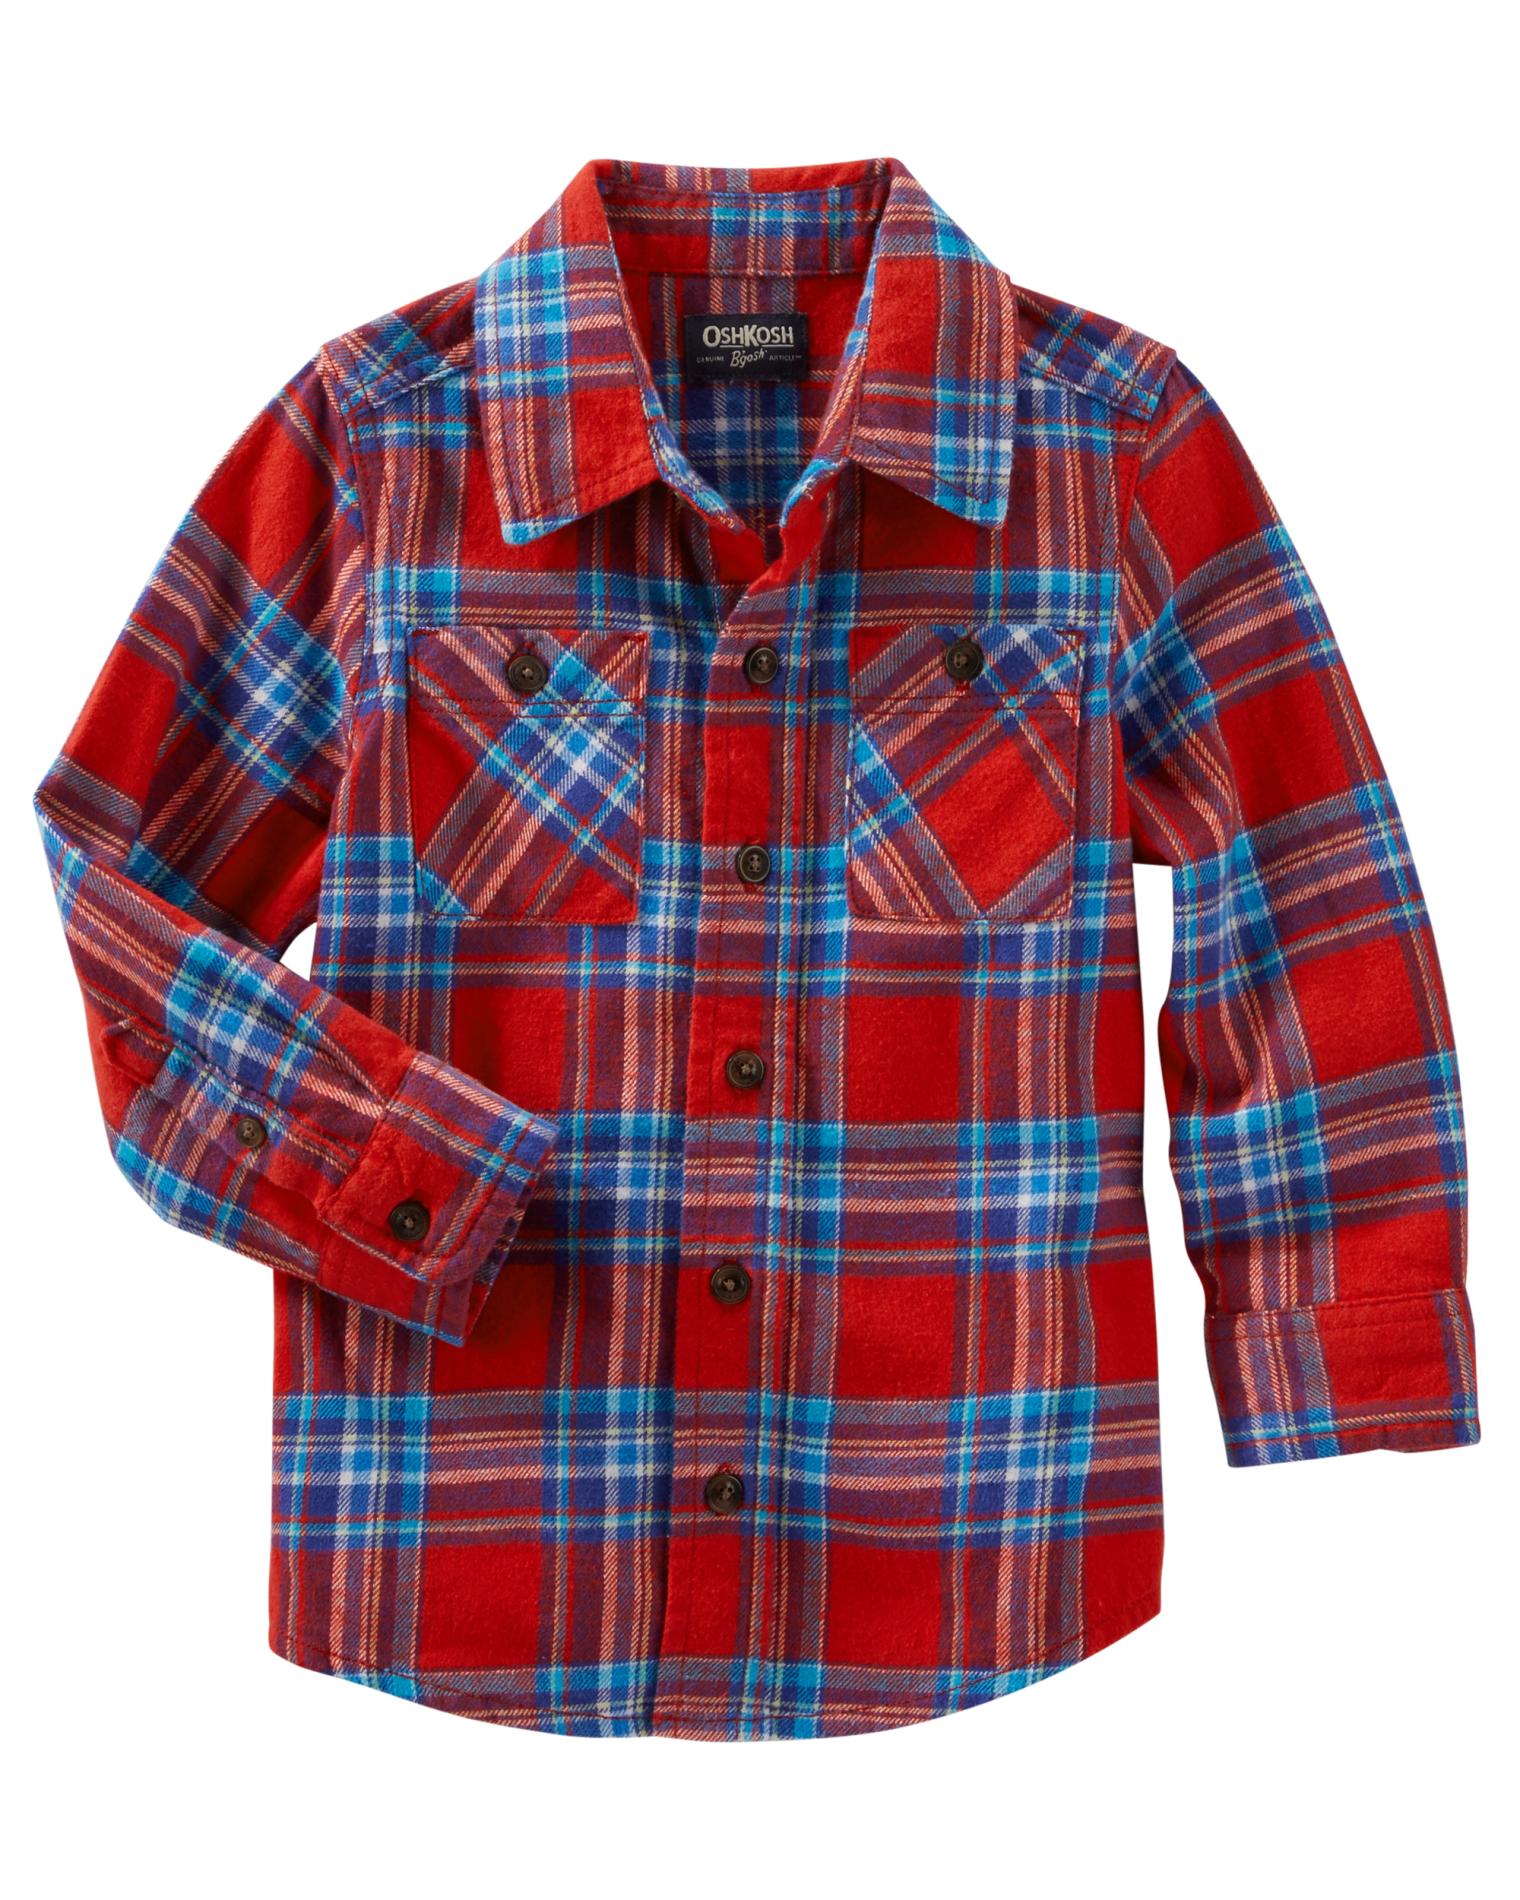 OshKosh Toddler Boys' Button-Front Shirt - Plaid